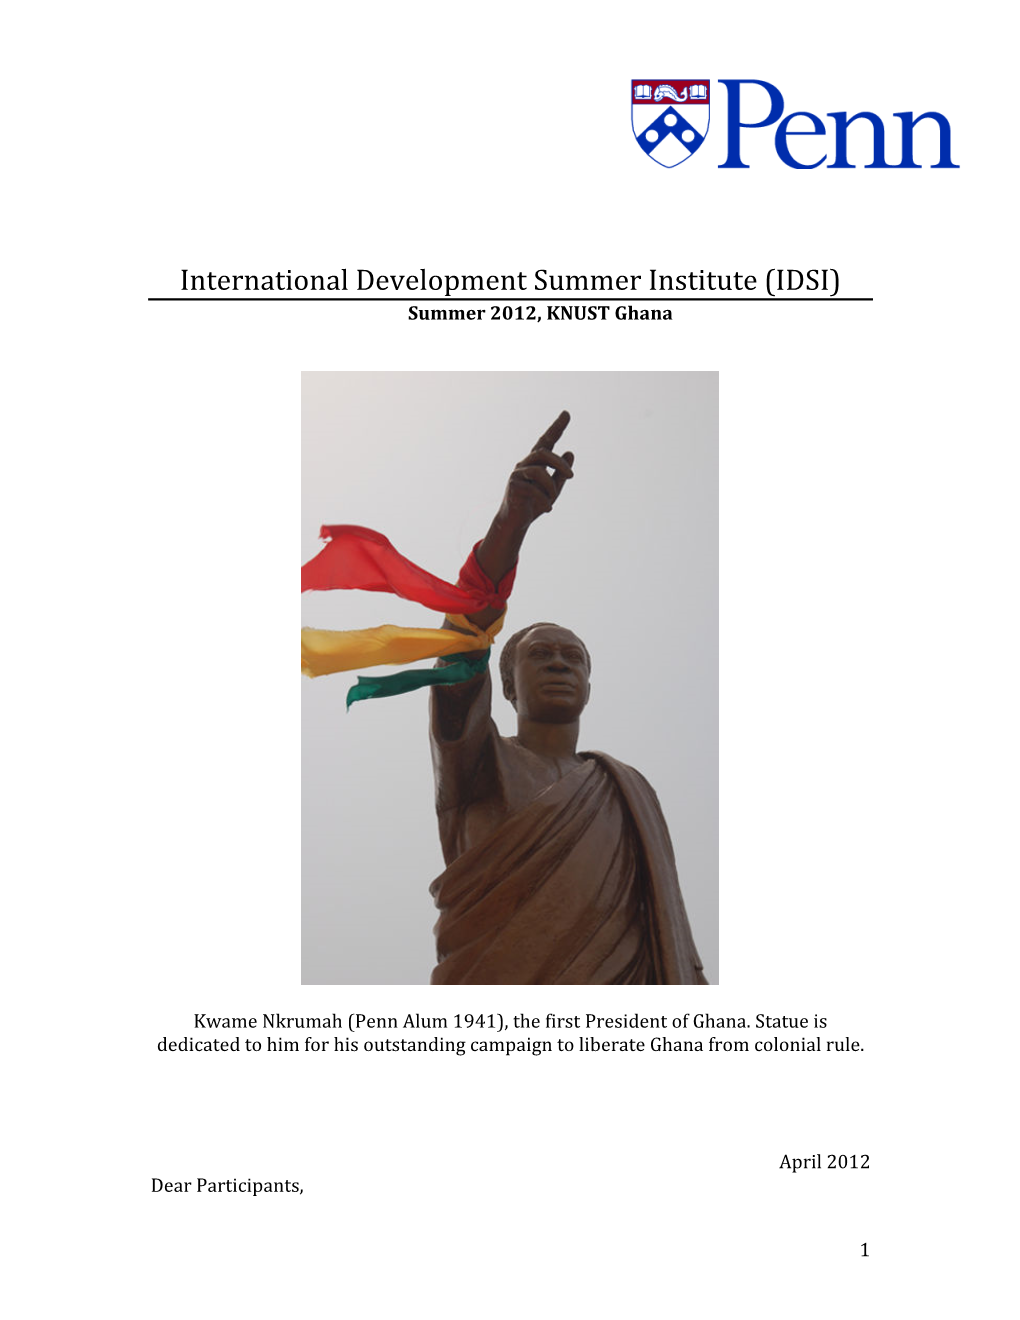 International Development Summer Institute (IDSI) Summer 2012, KNUST Ghana